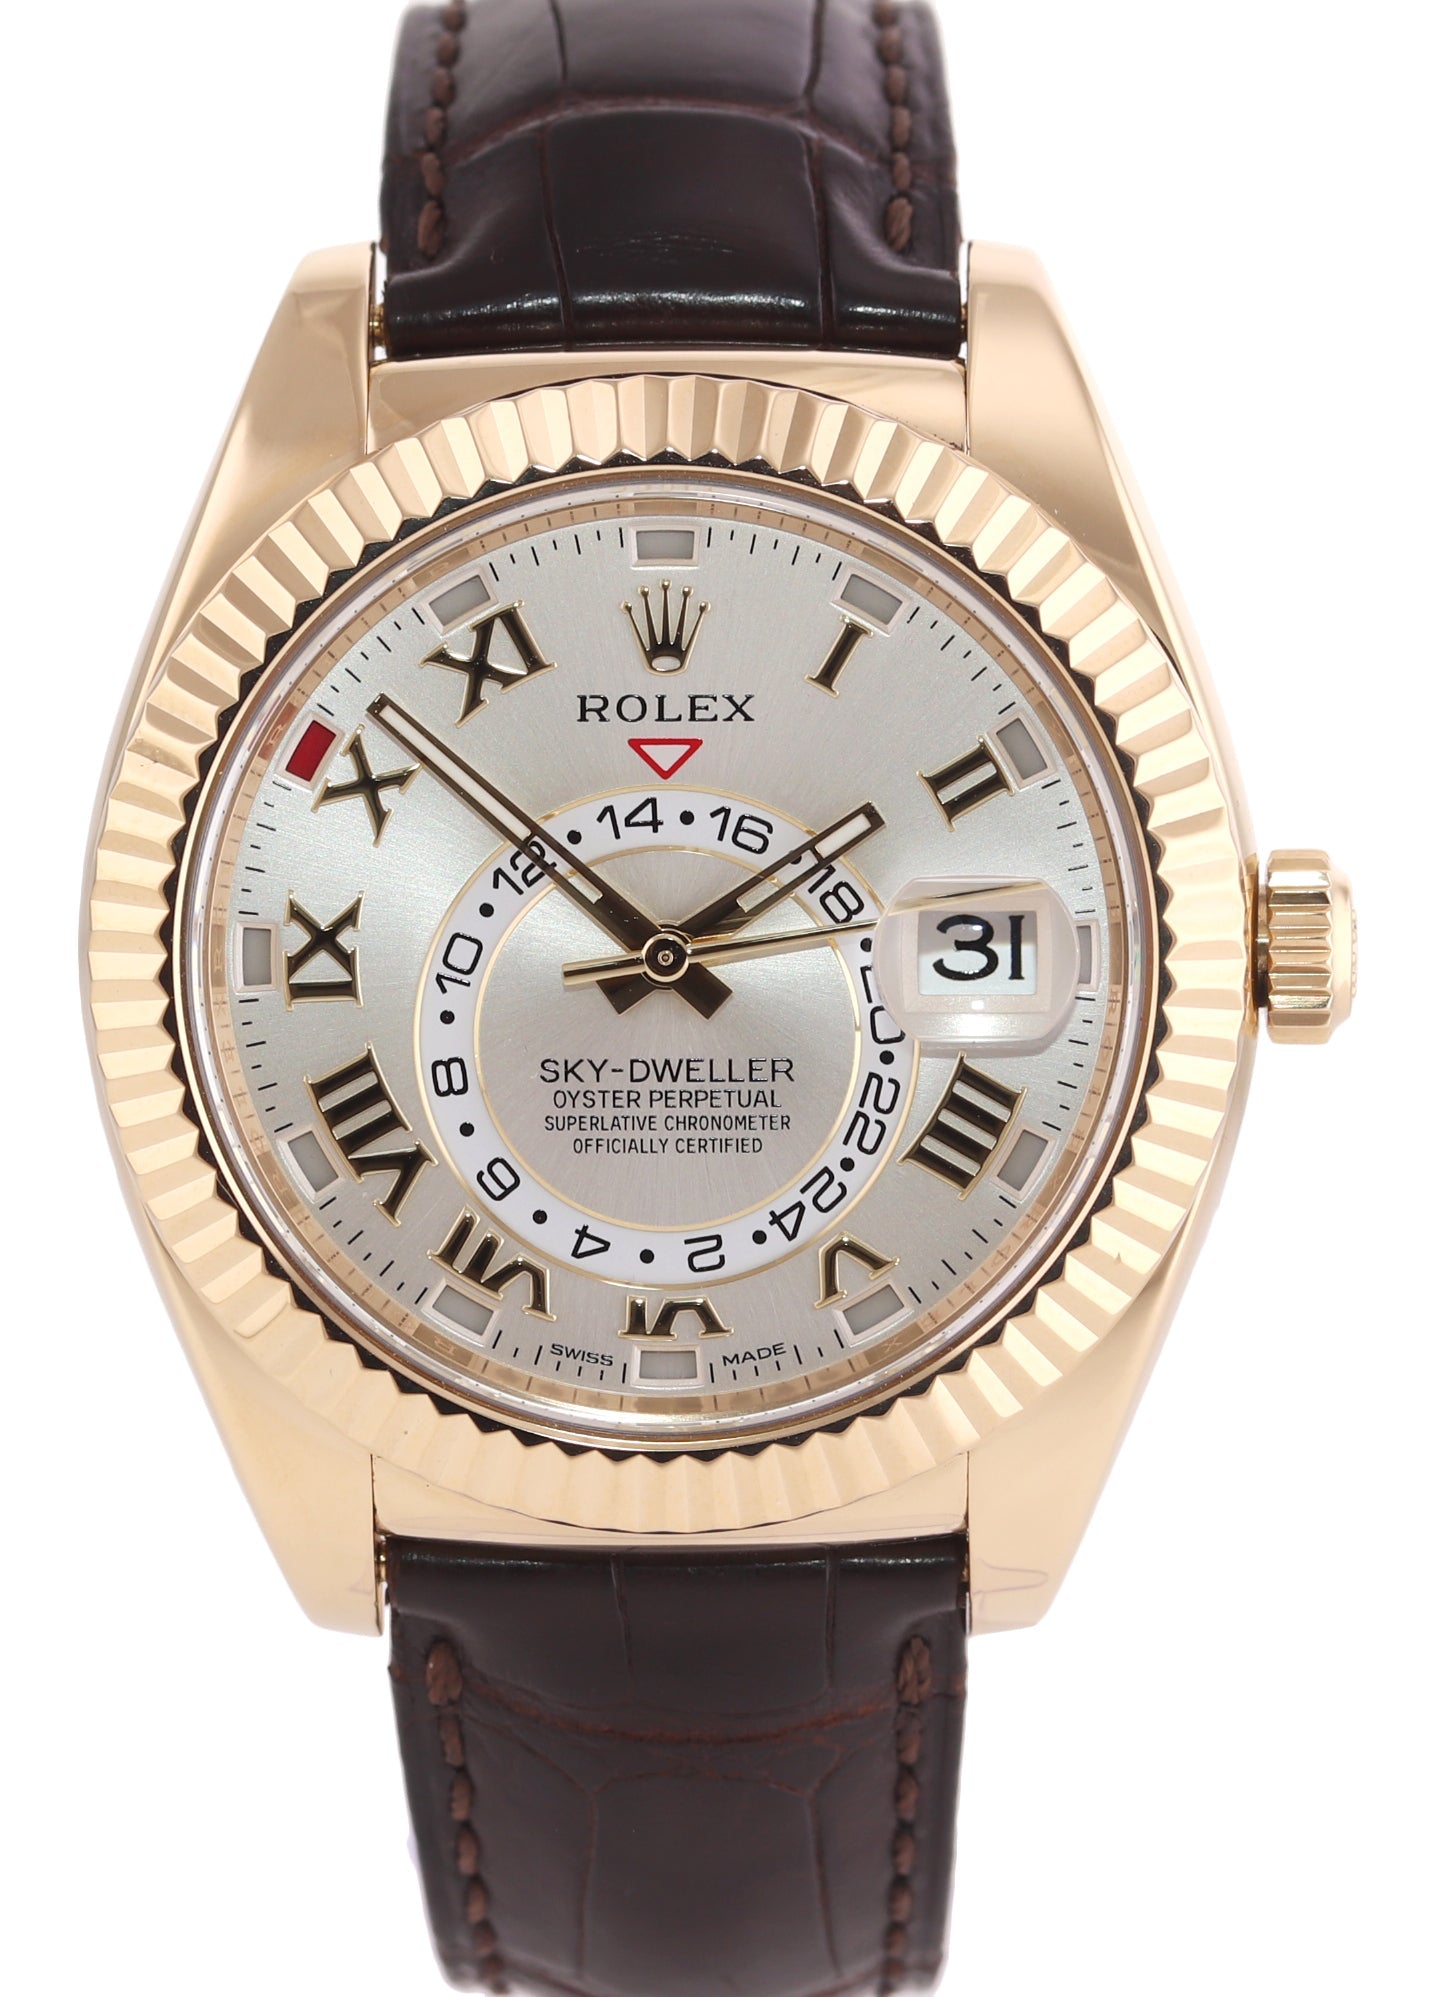 MINT 2016 Rolex Sky-Dweller 18K Yellow Gold 326138 42mm Silver Roman Leather Watch